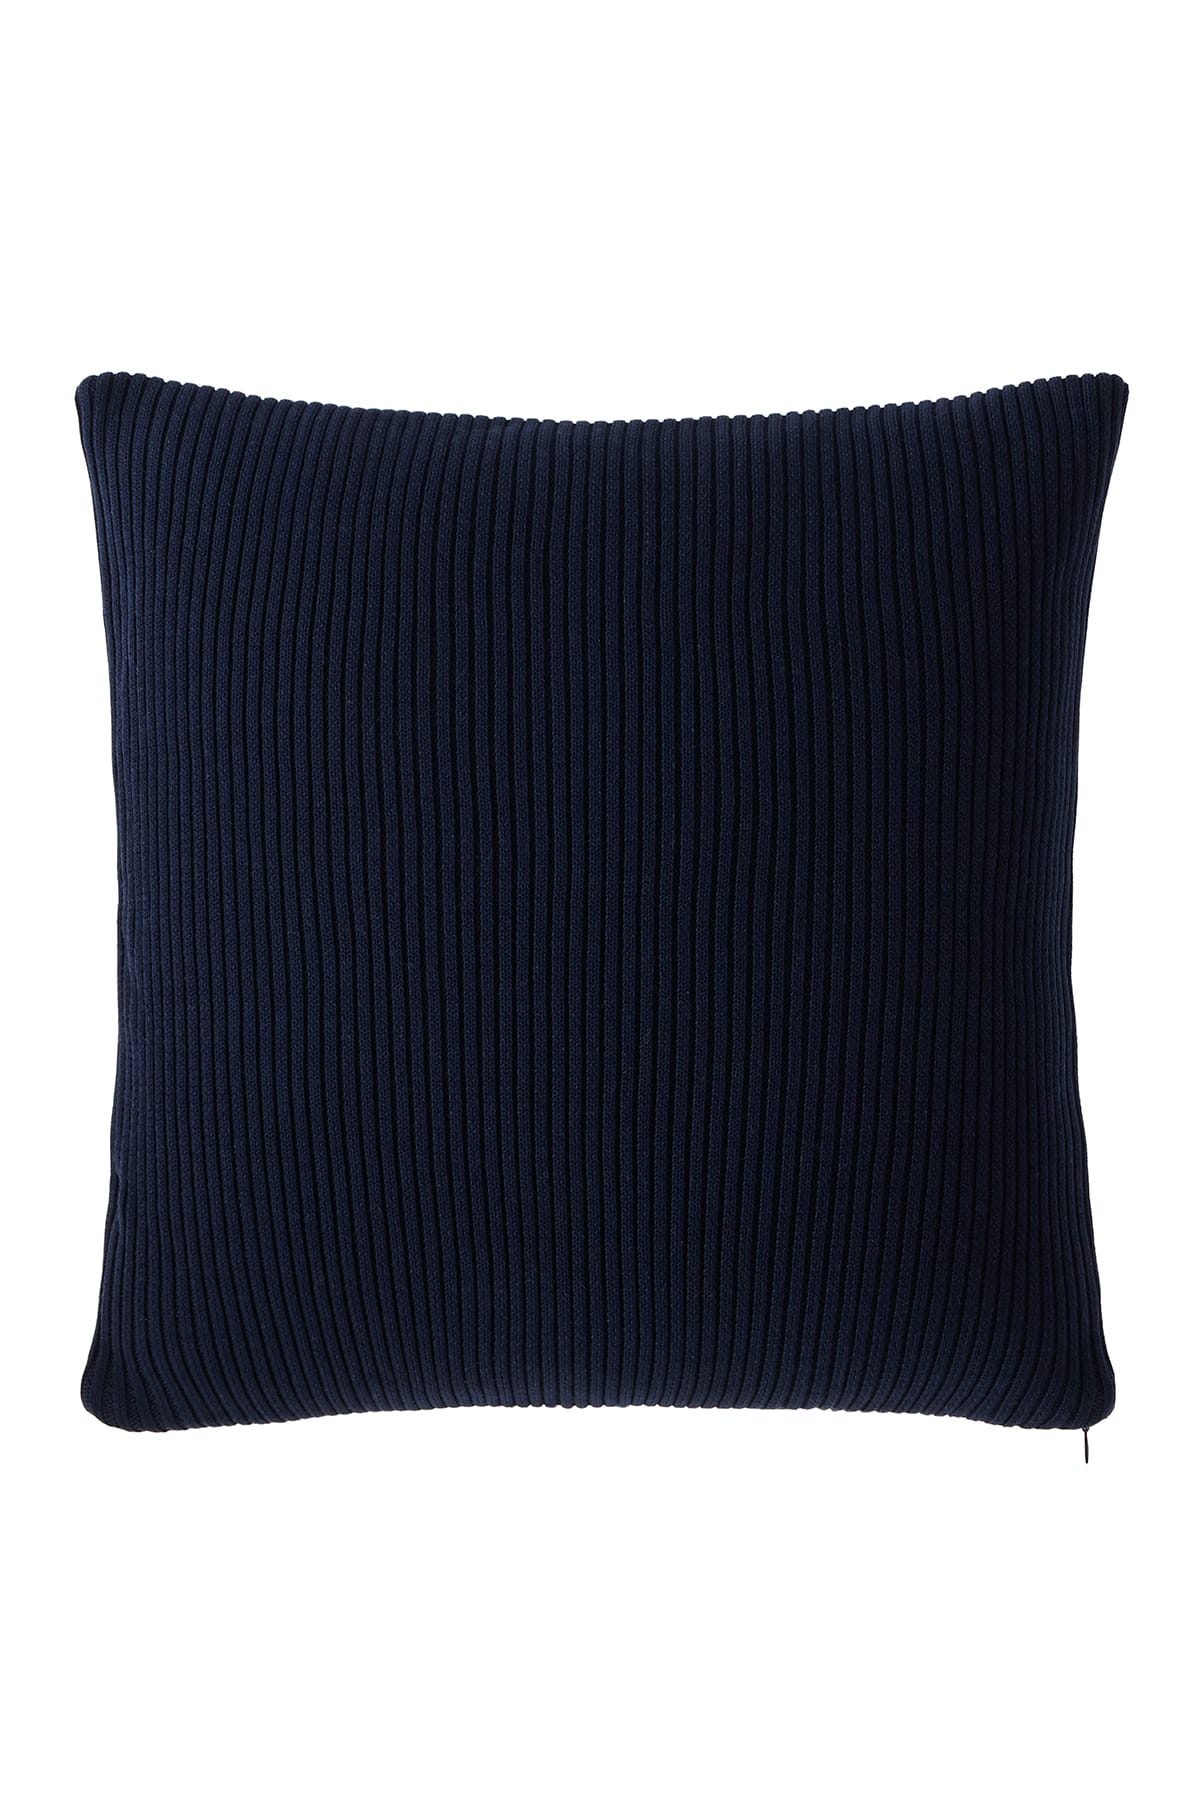 Image Lauren Ralph Lauren Flora Rib-Knit Decorative Pillow, 18"Sq.